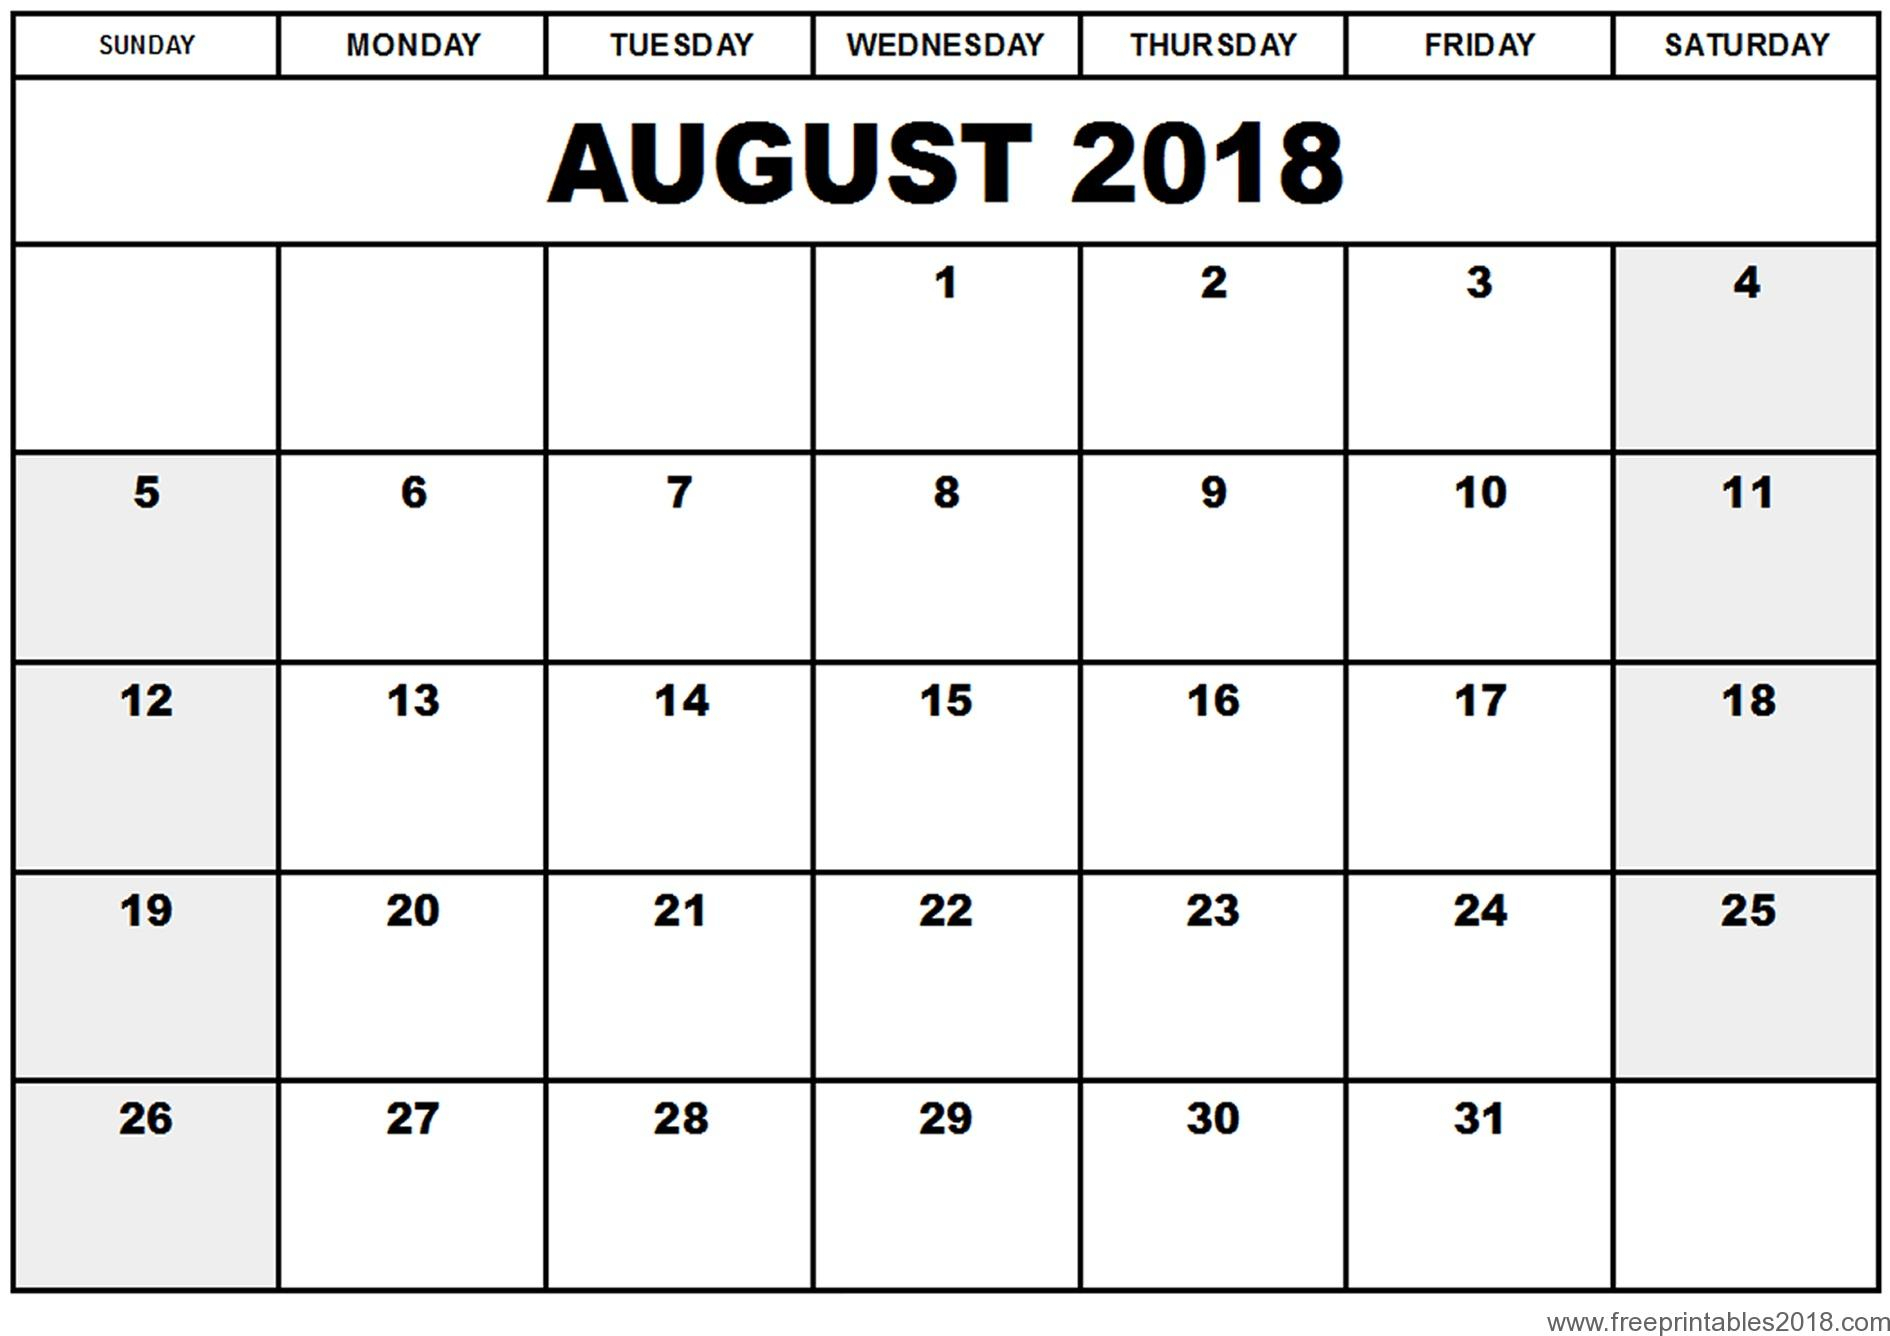 Free Printable Calendar August 2018 | Free Printables 2019